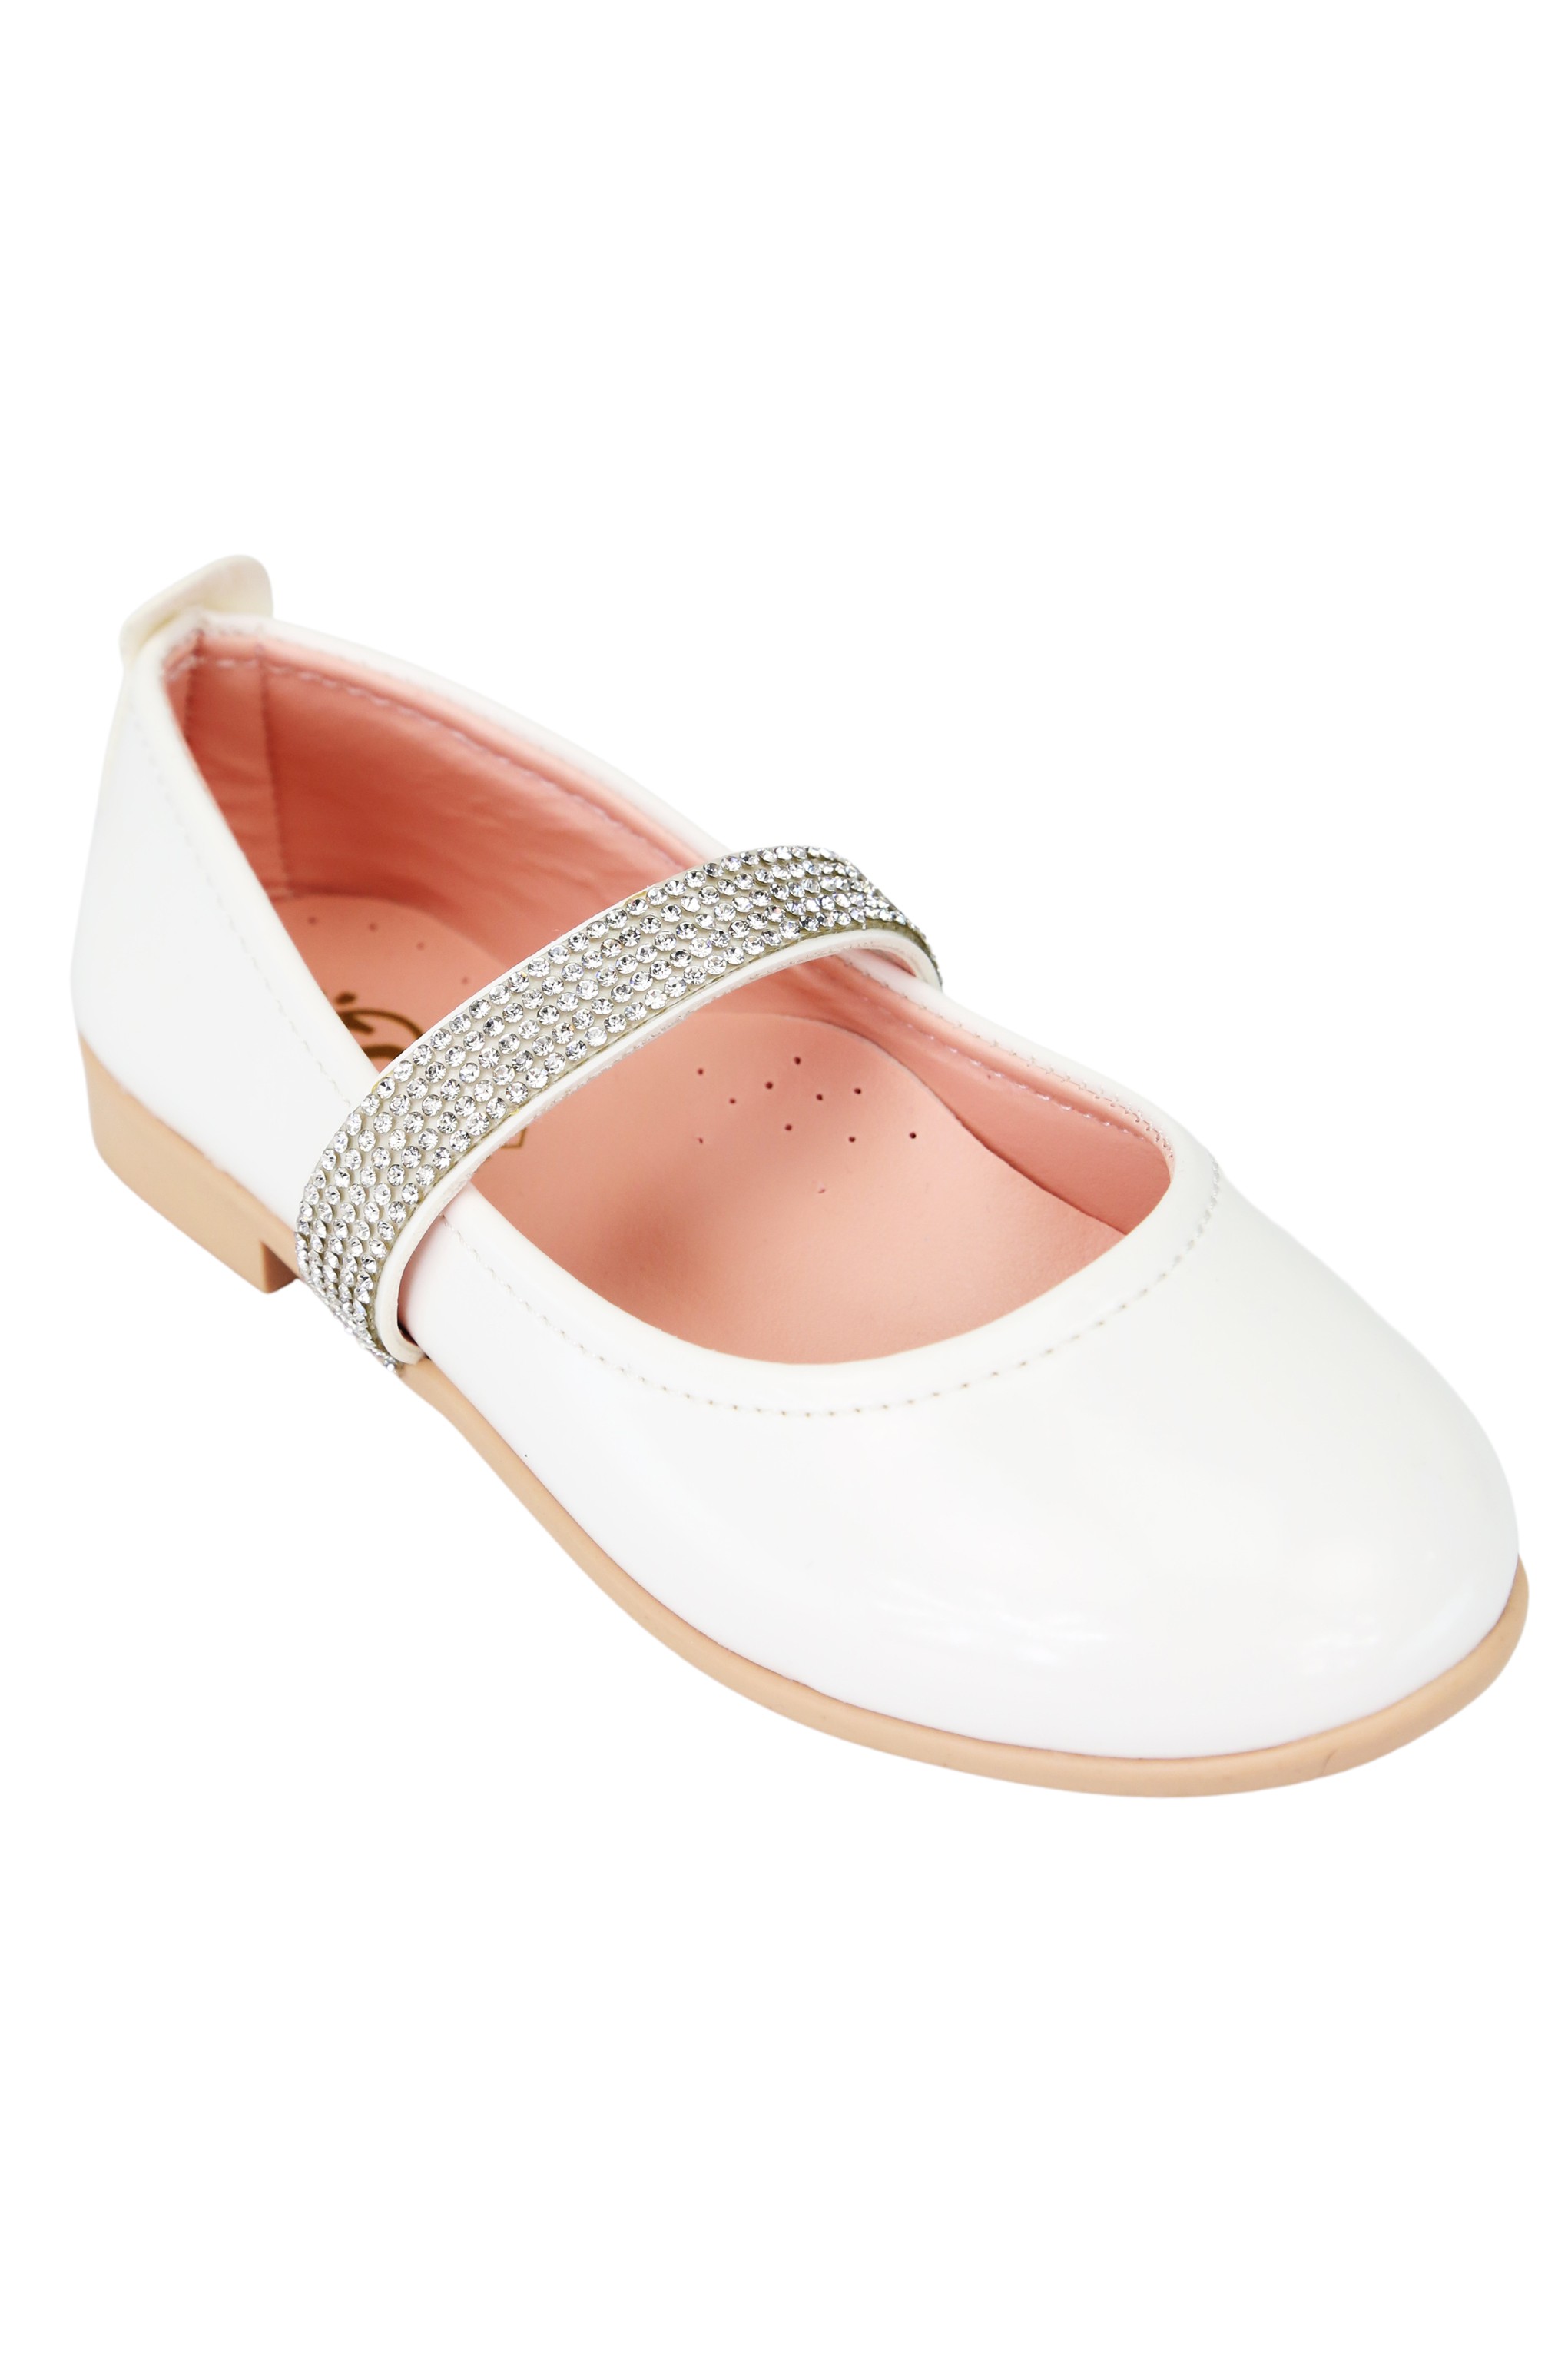 Girls Rhinestone Patent Mary Jane Shoes - ARWEN - White